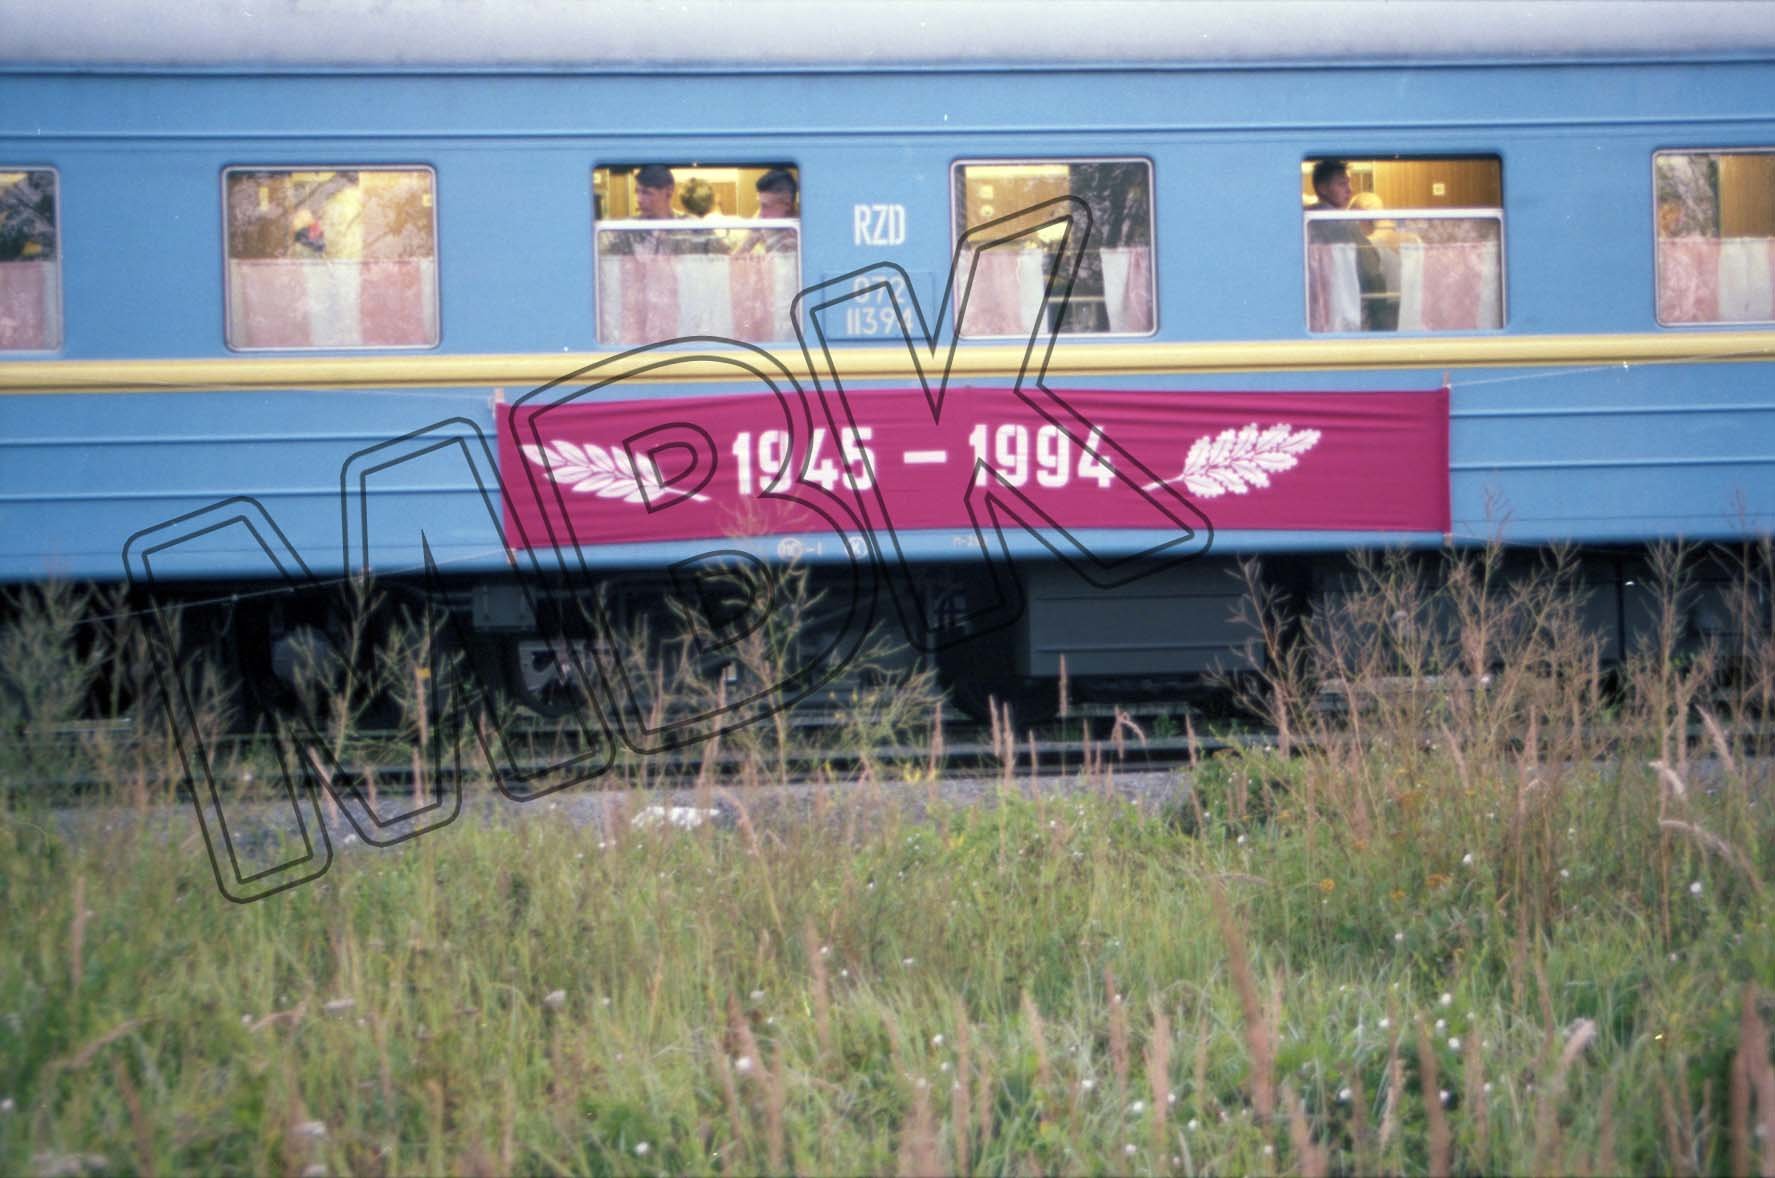 Fotografie: Dekoration der Lokomotive des Sonderzuges der Berlin-Brigade, vor Moskau, 3. September 1994 (Museum Berlin-Karlshorst RR-P)